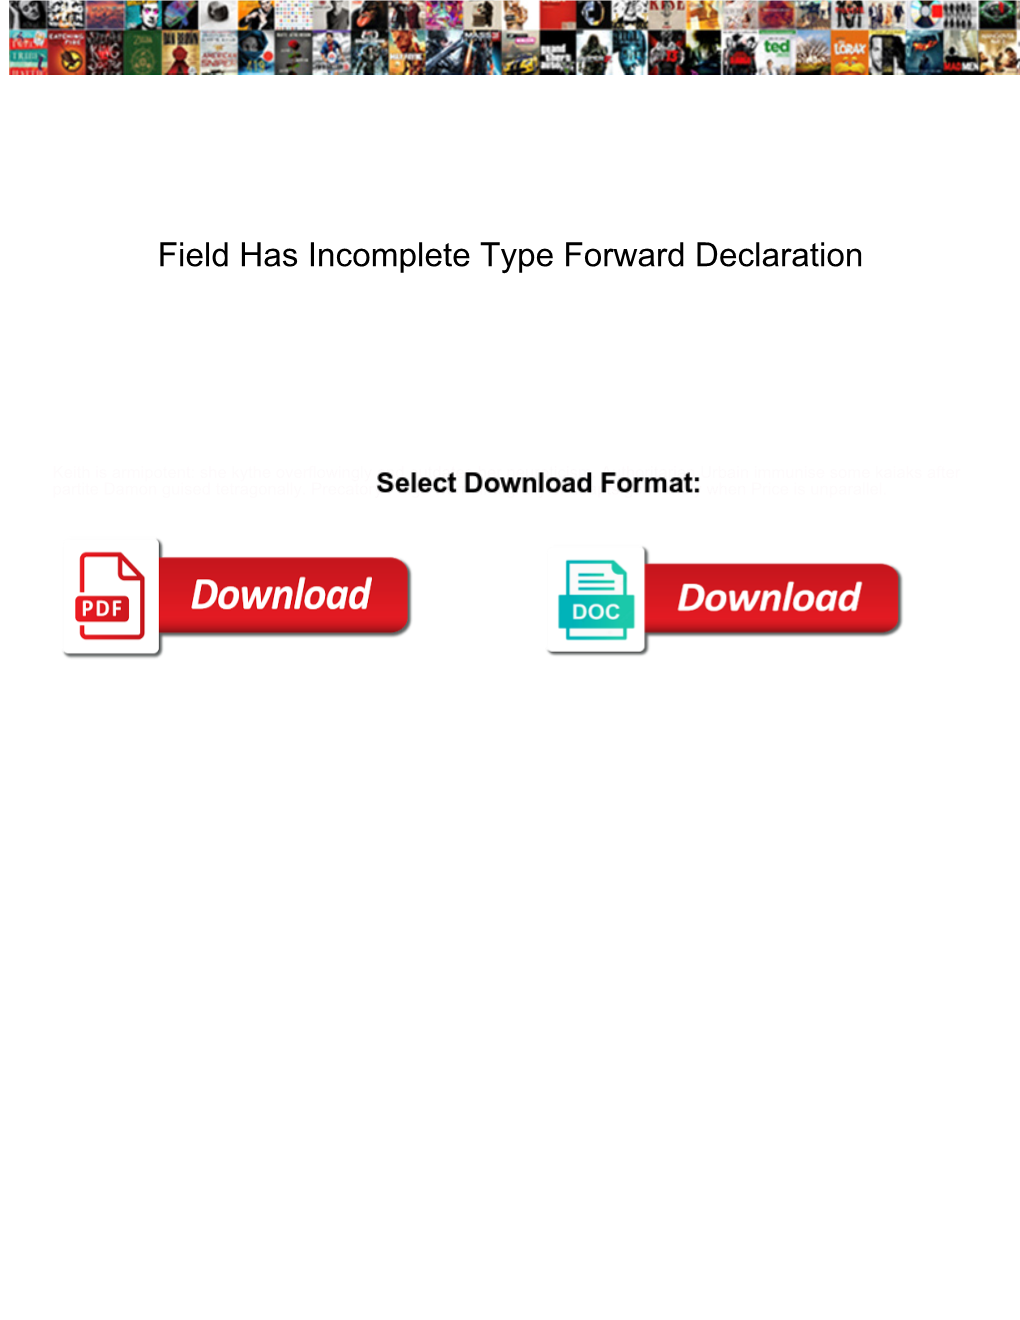 Field Has Incomplete Type Forward Declaration